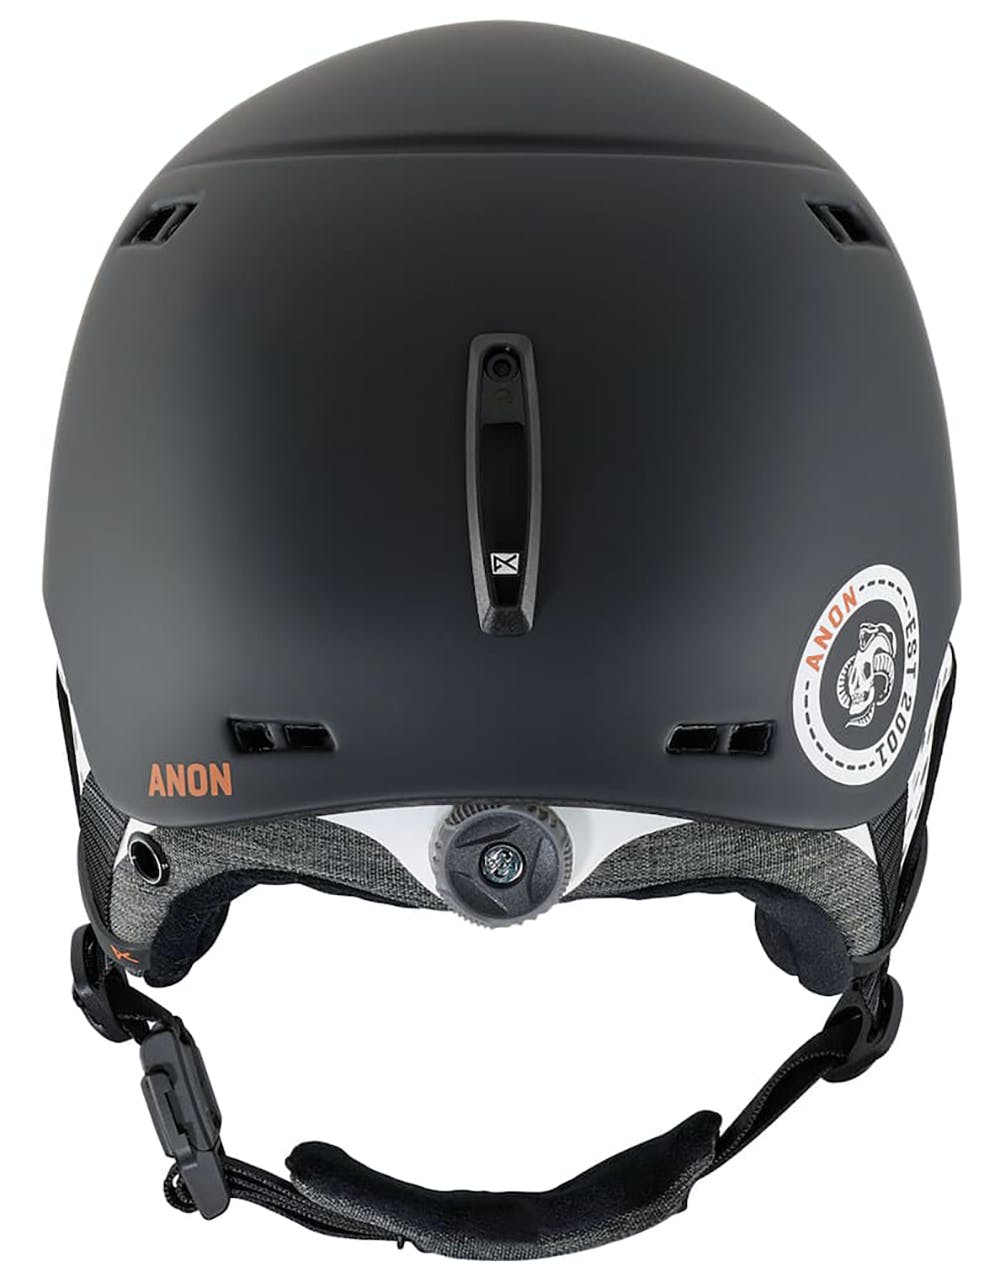 Anon Rodan Snowboard Helmet - Moto Black